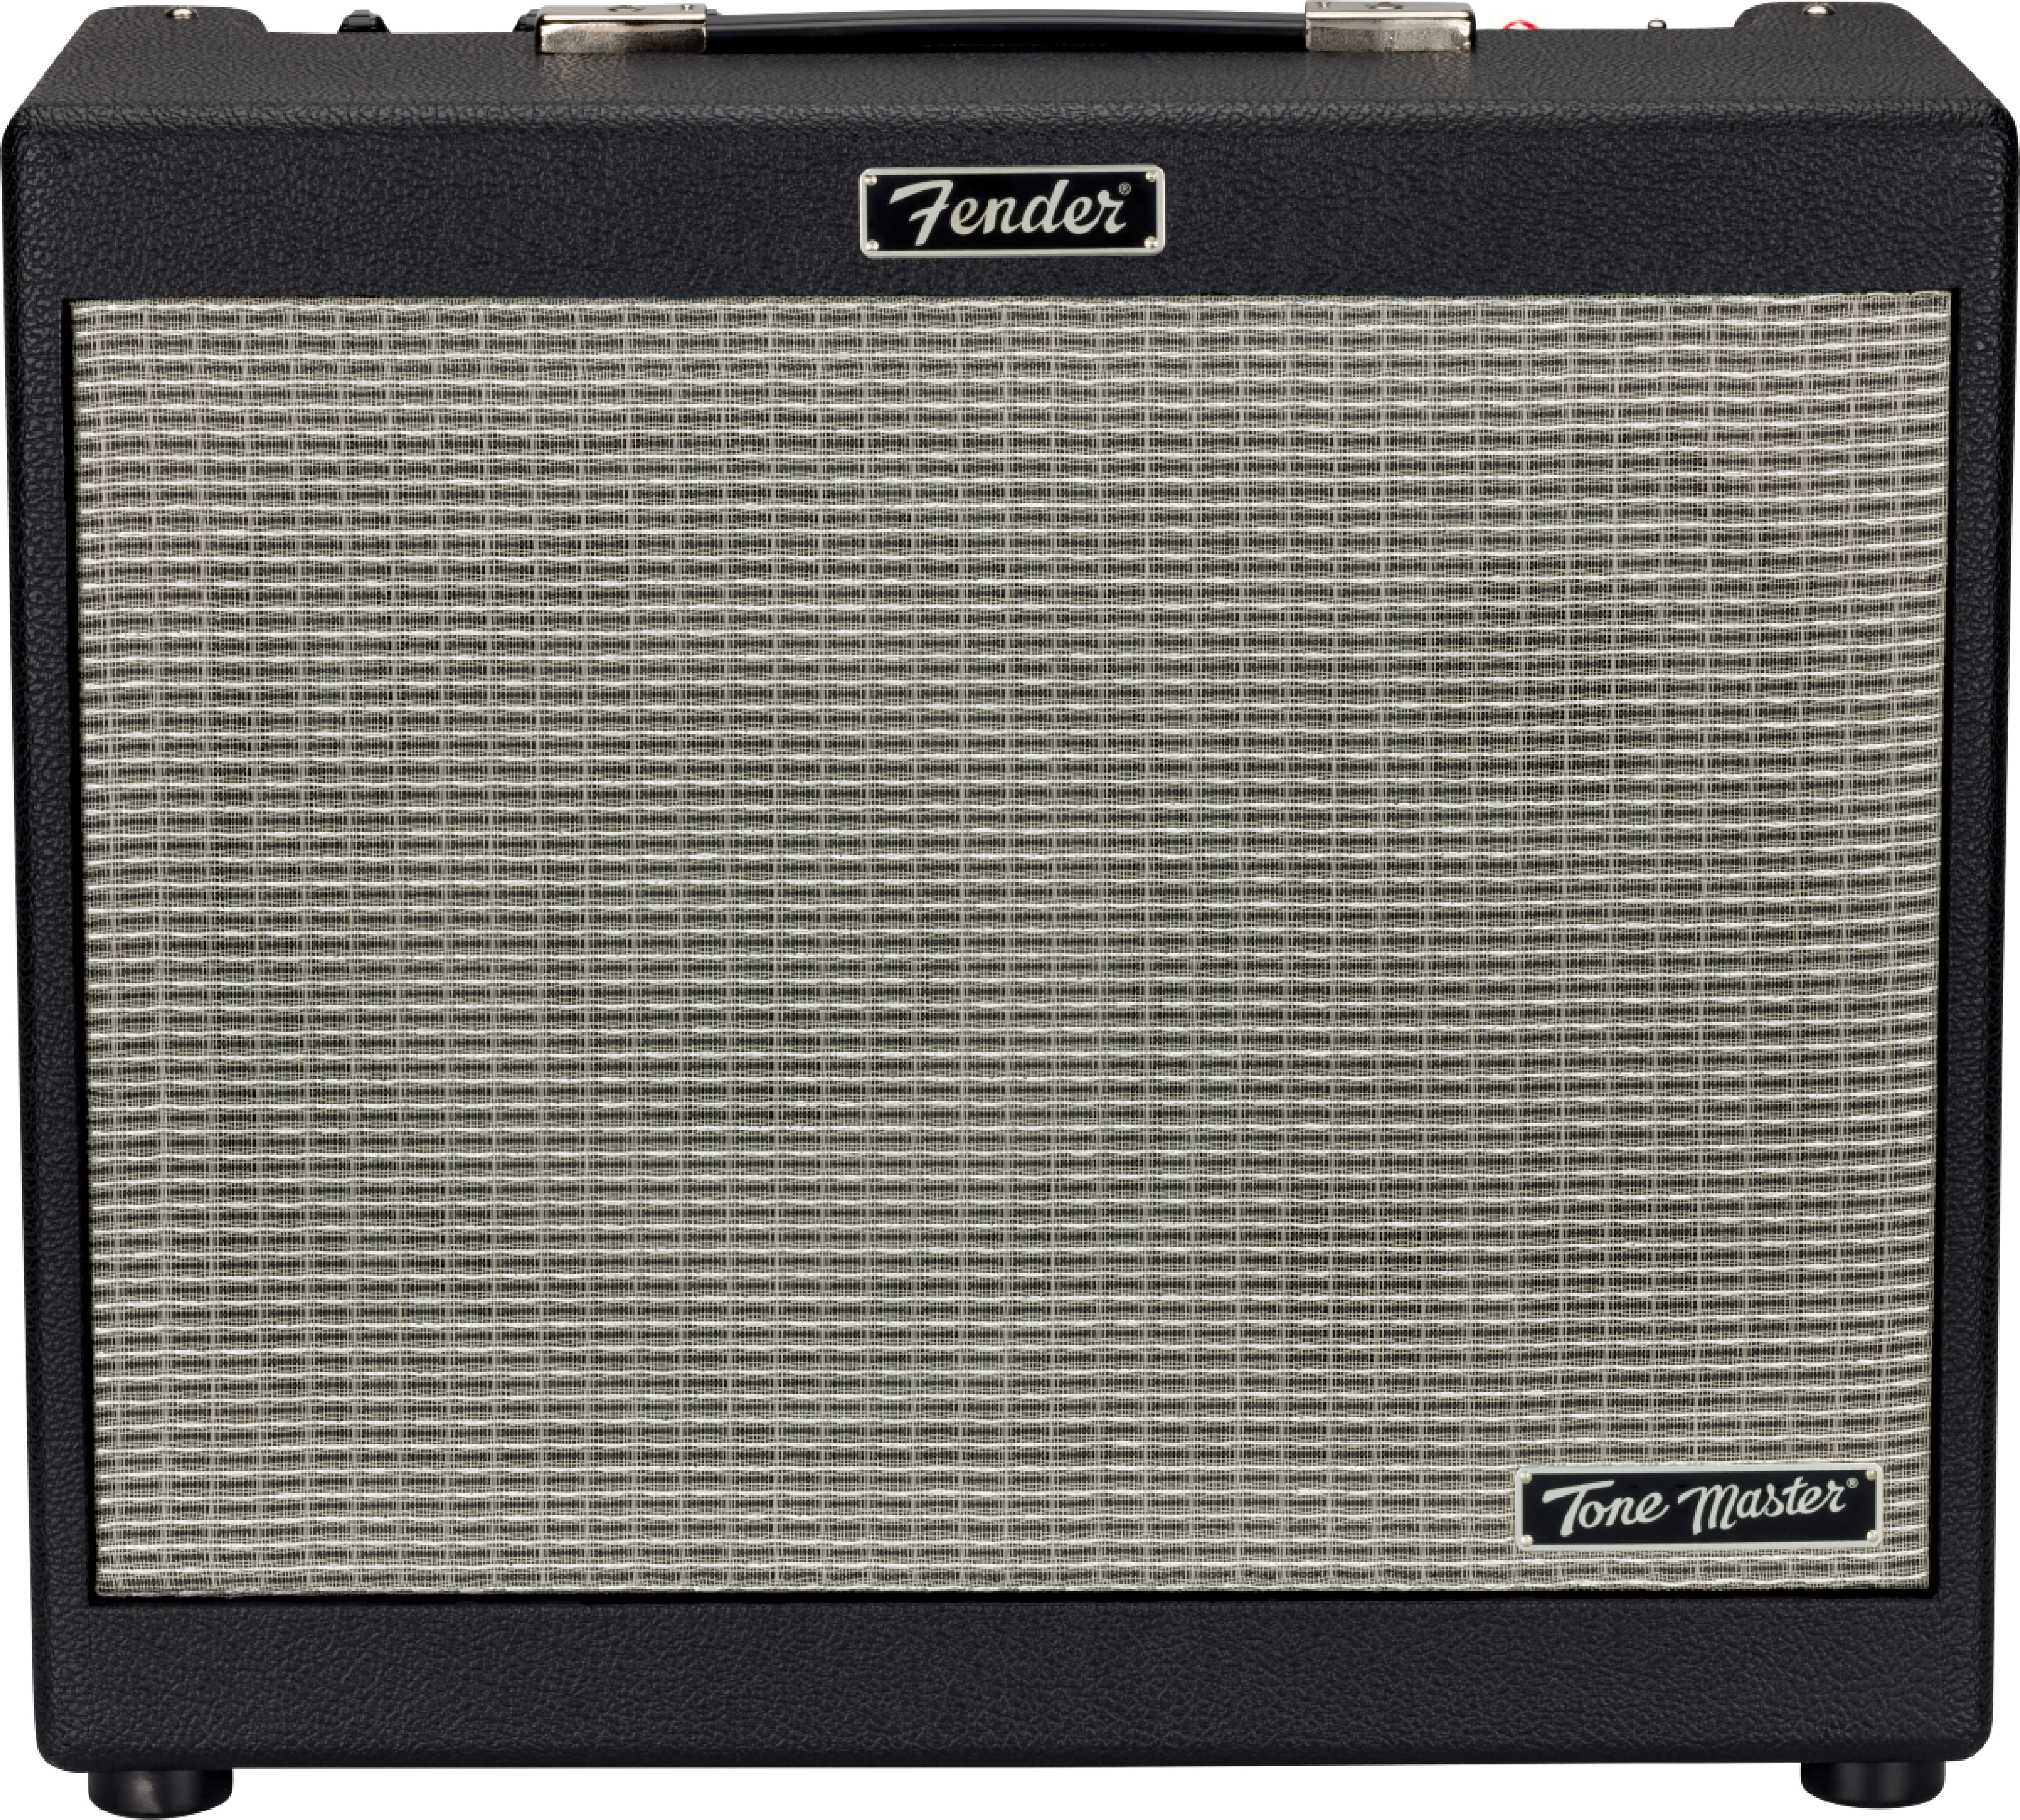 Fender Tone Master FR-10 Box